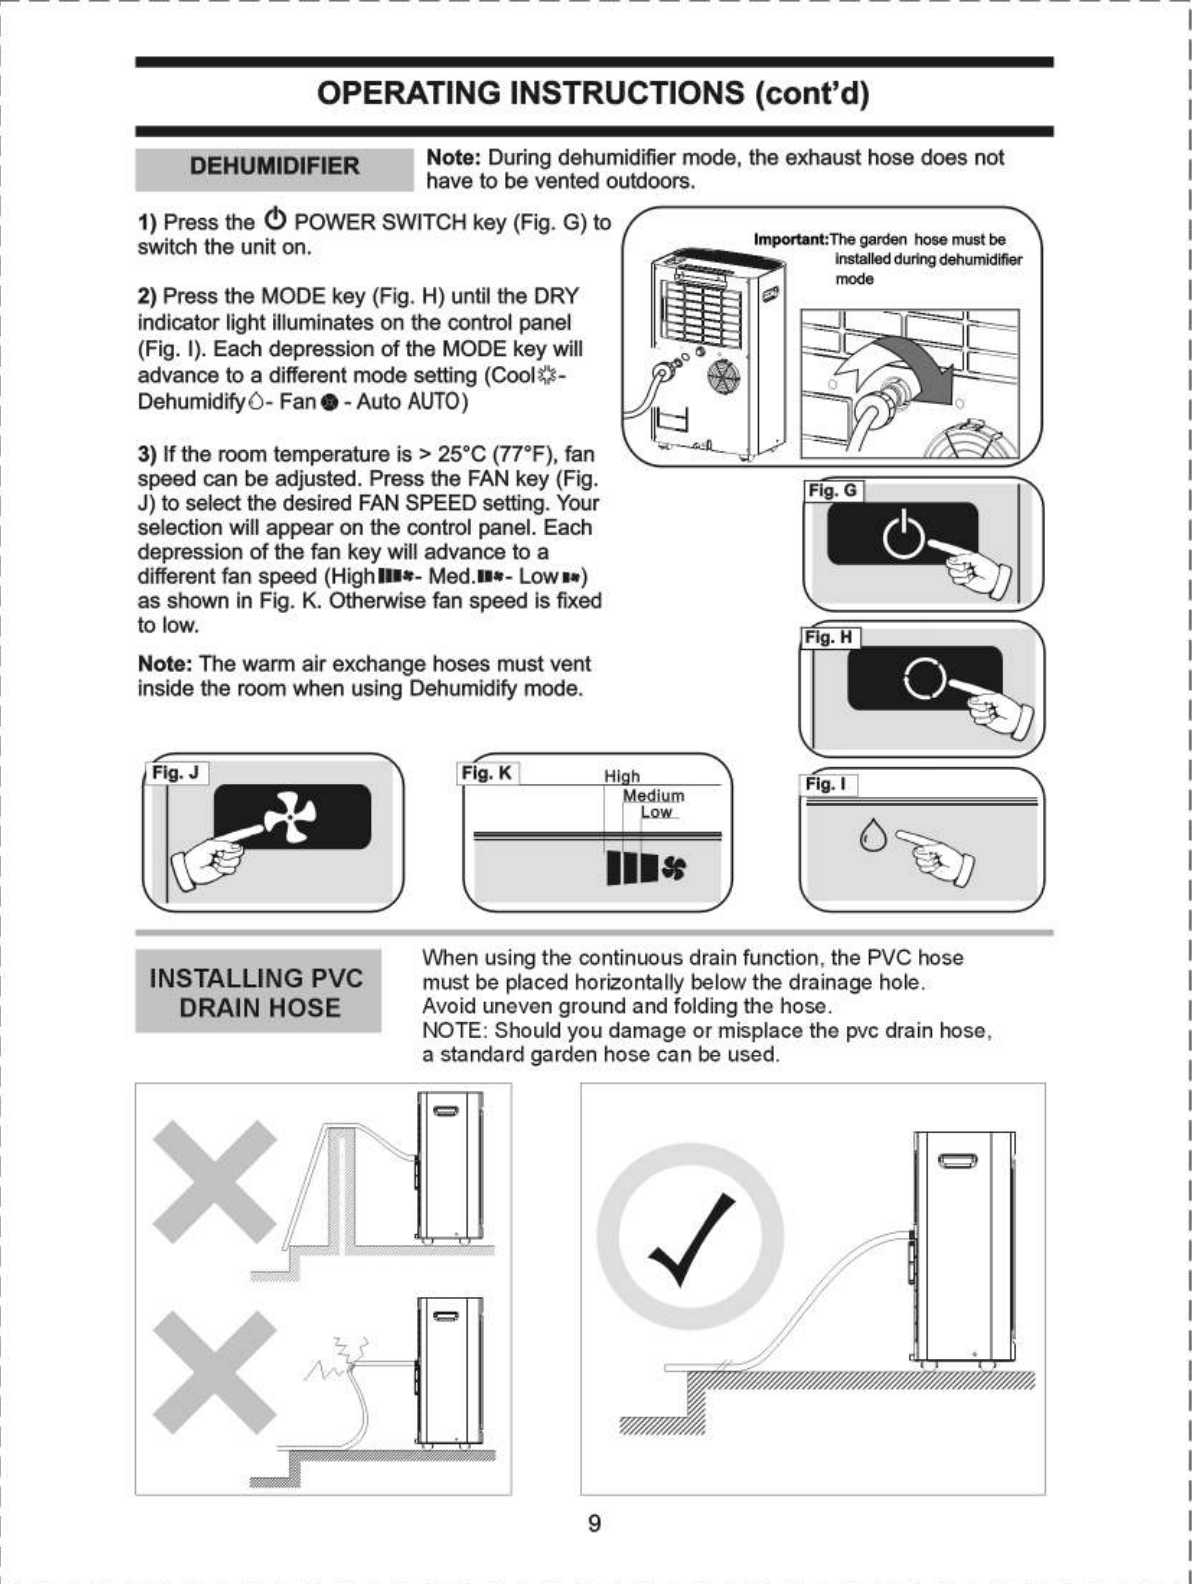 Simplicity 28 dehumidifier manual